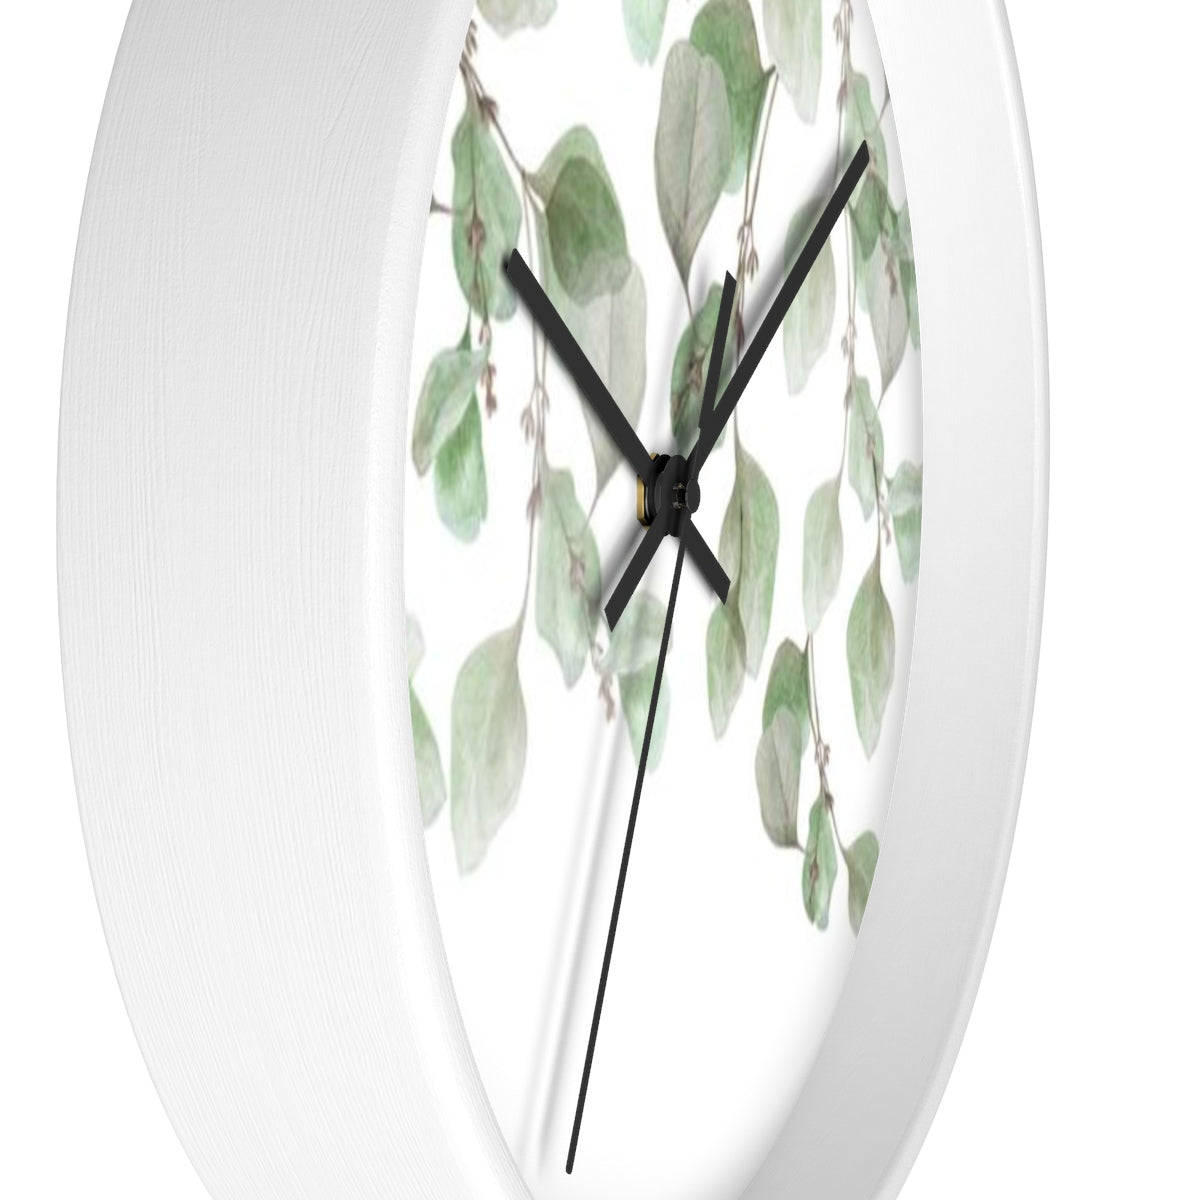 Leaves Wall Clock - Liz Kapiloto Art & Design